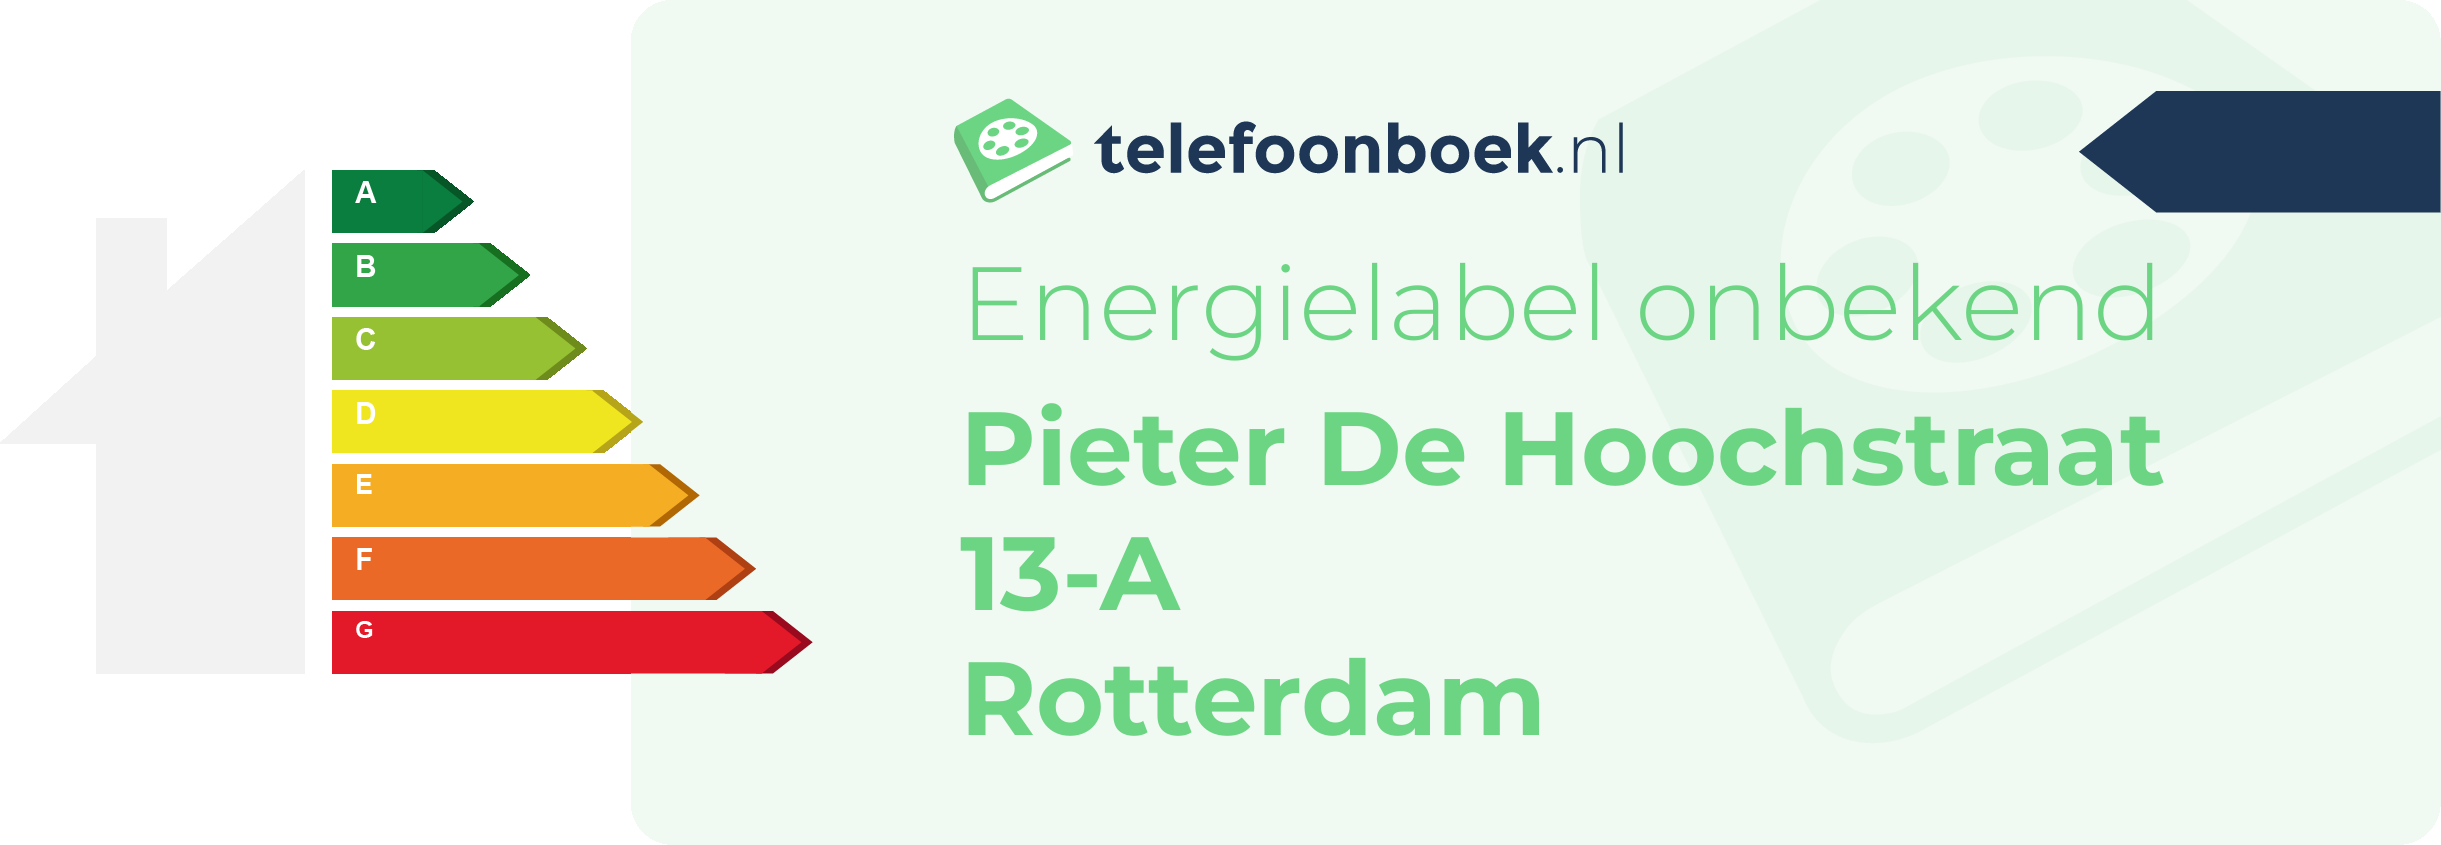 Energielabel Pieter De Hoochstraat 13-A Rotterdam